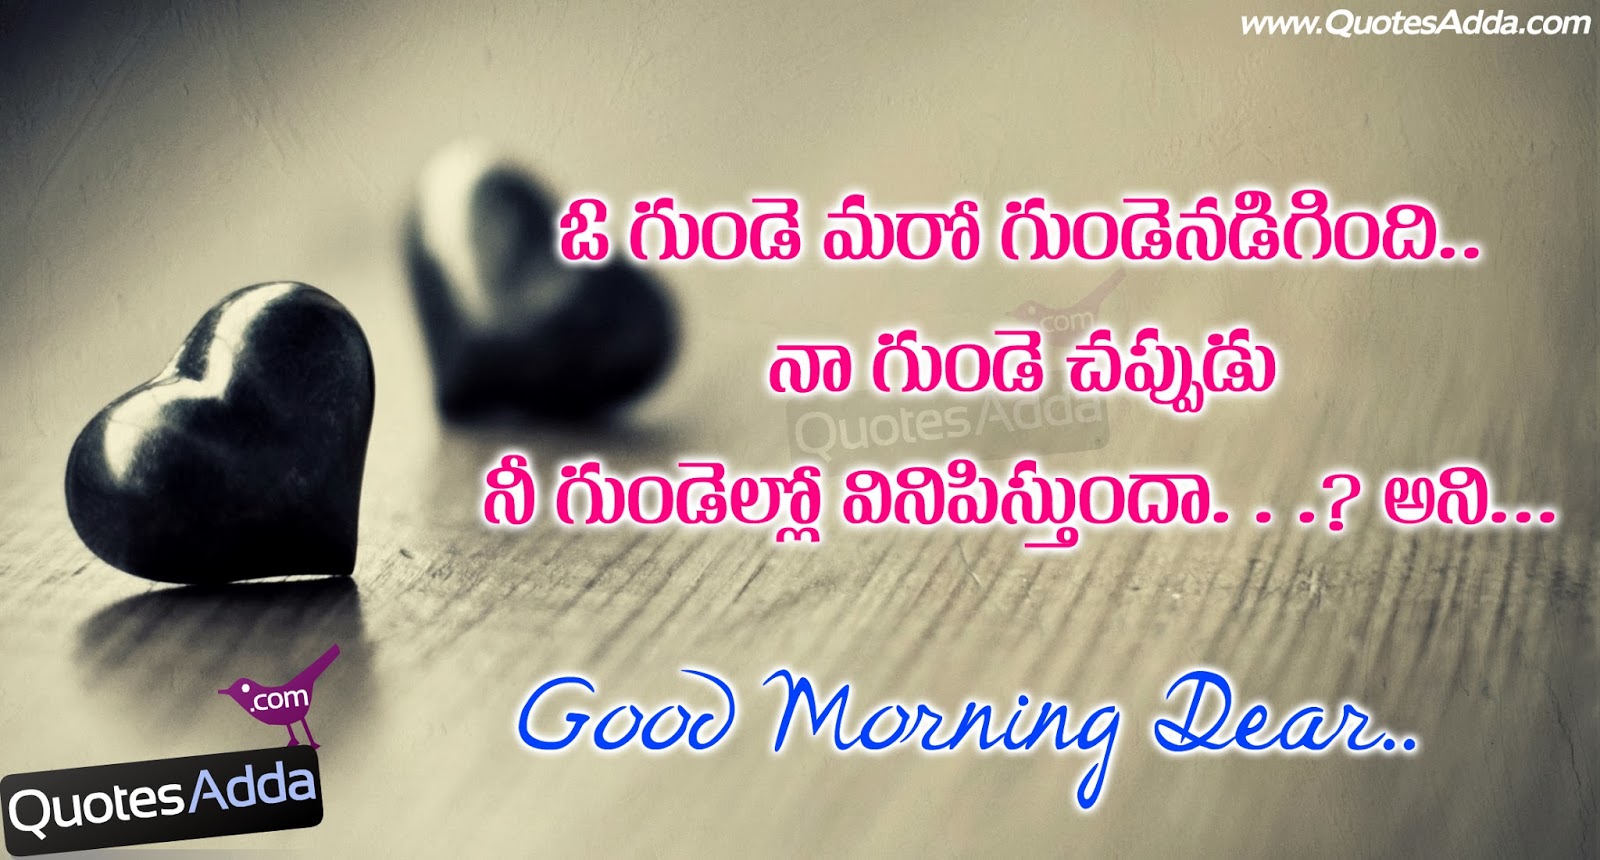  Good  Morning  Telugu  Kavithalu QuotesAdda com Telugu  